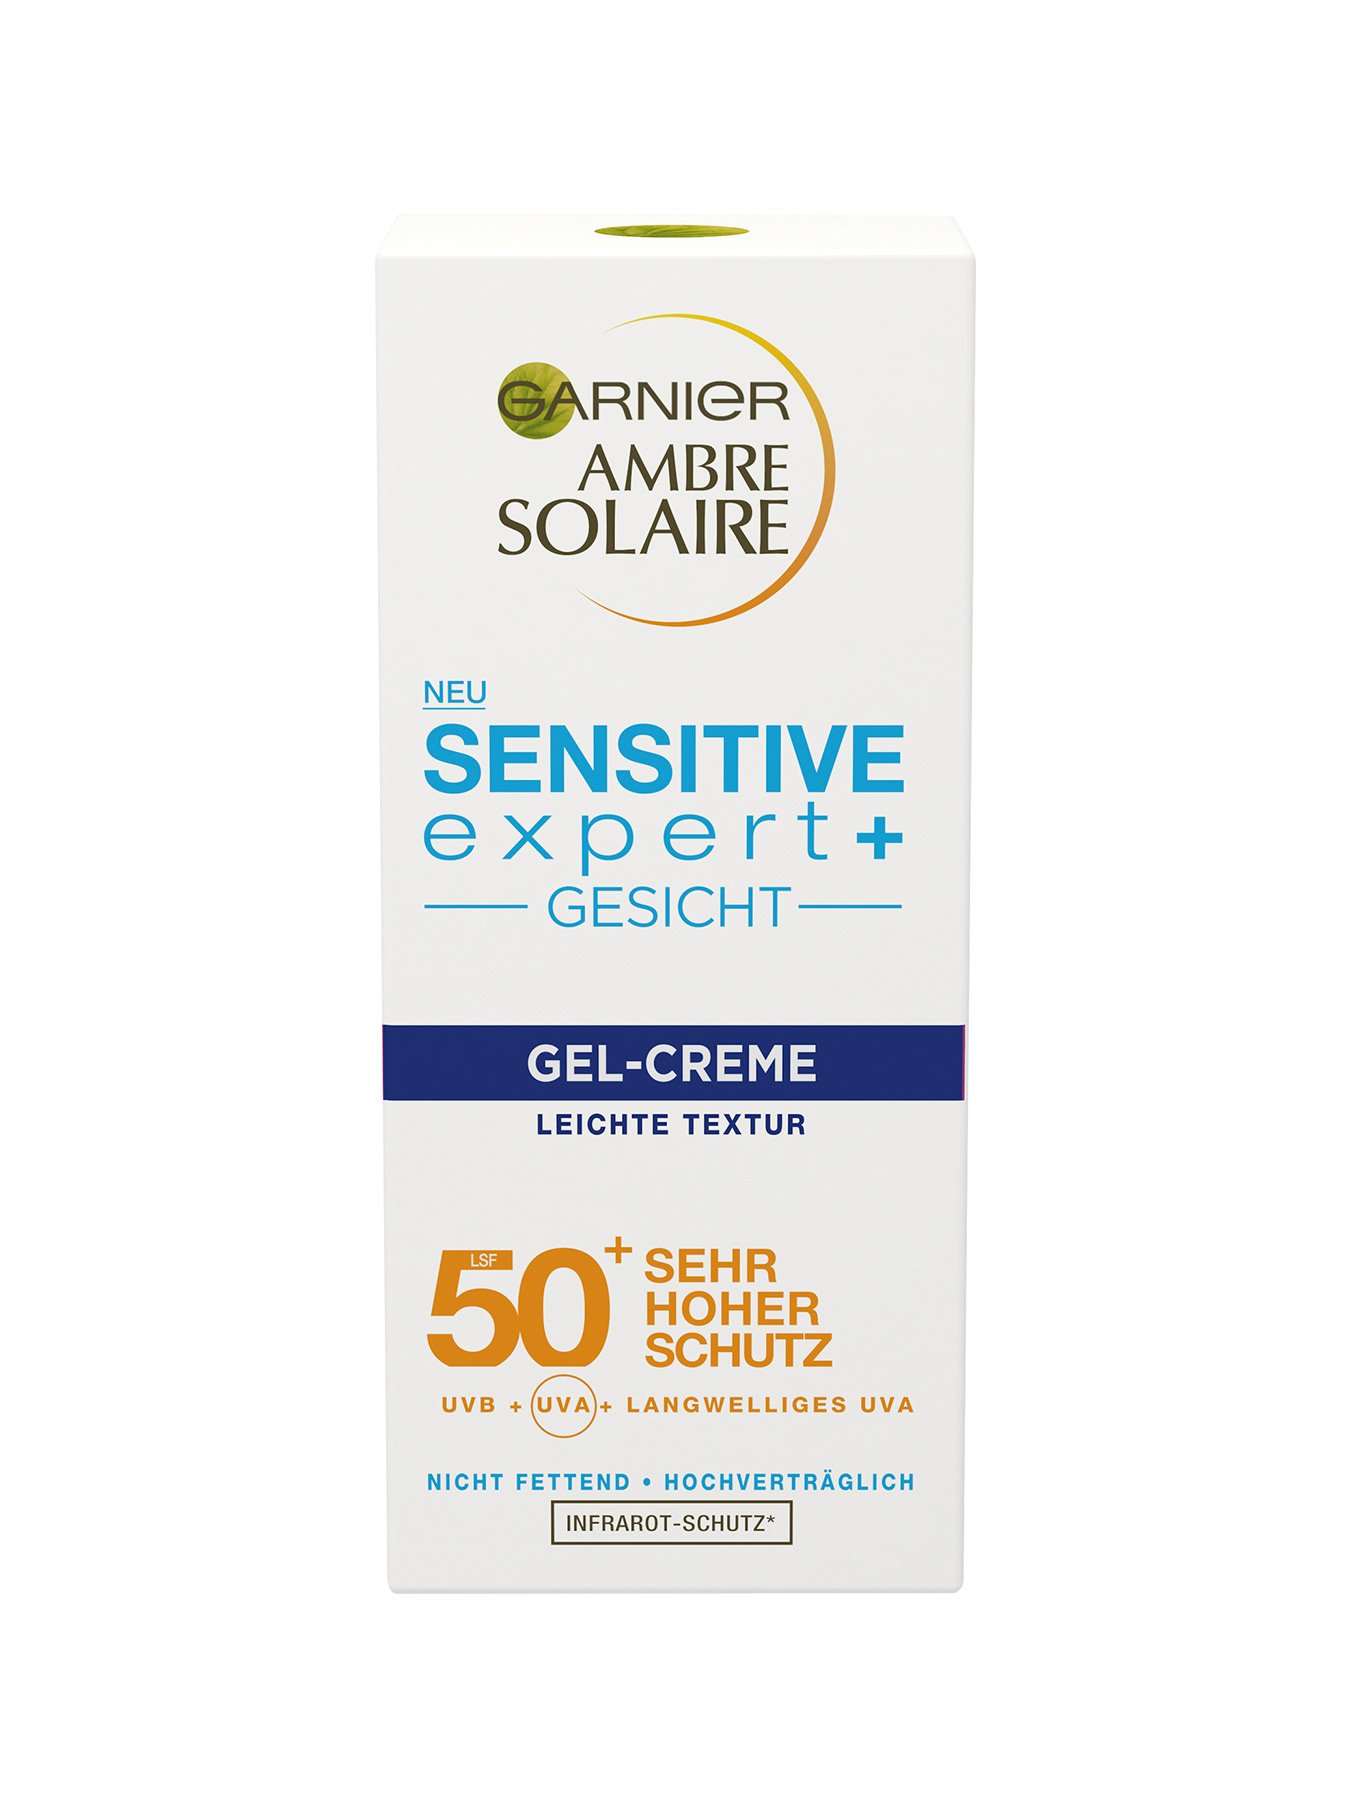 Ambre Solaire Sensitive expert+ LSF Gel-Creme | Garnier Gesicht 50